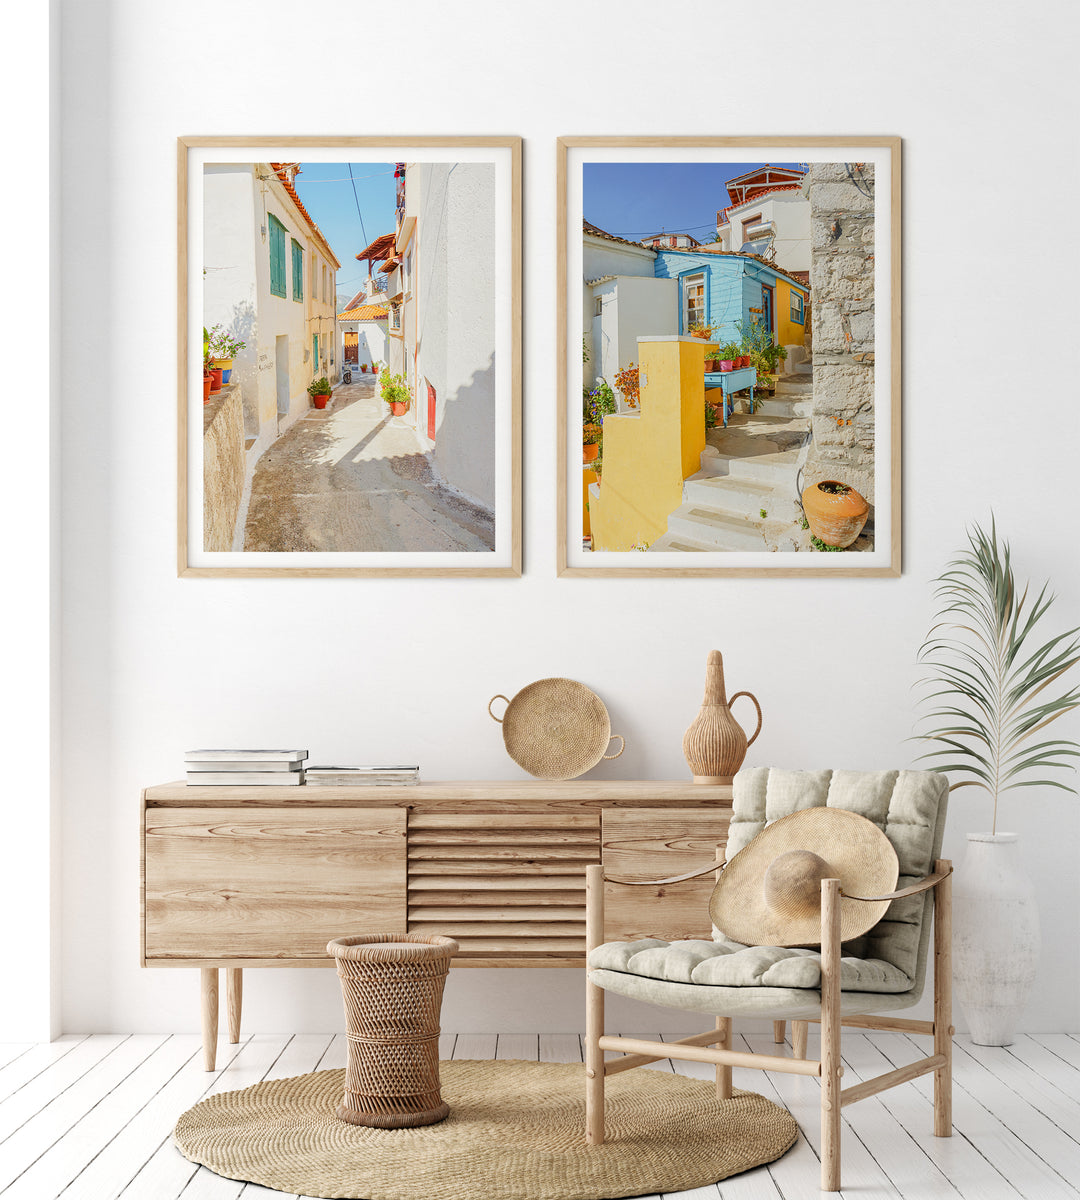 Samos Village Gallery Wall | Fine Art Photography Print Set